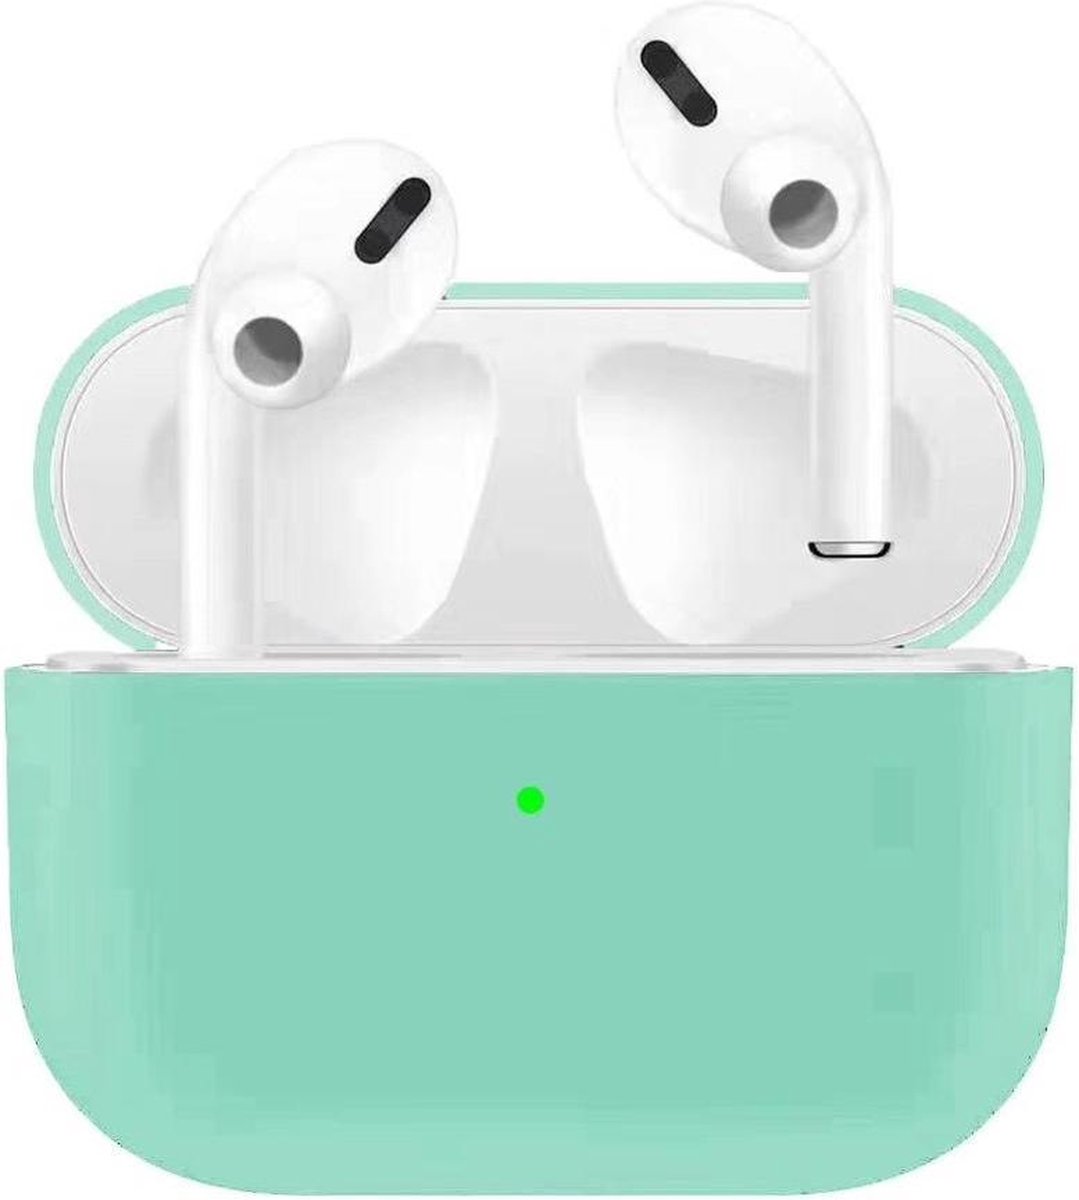 Apple AirPods Pro Hoesje - Mint Groen - Mint Blauw - Siliconen - Case - Cover - Soft case - Groen - Blauw